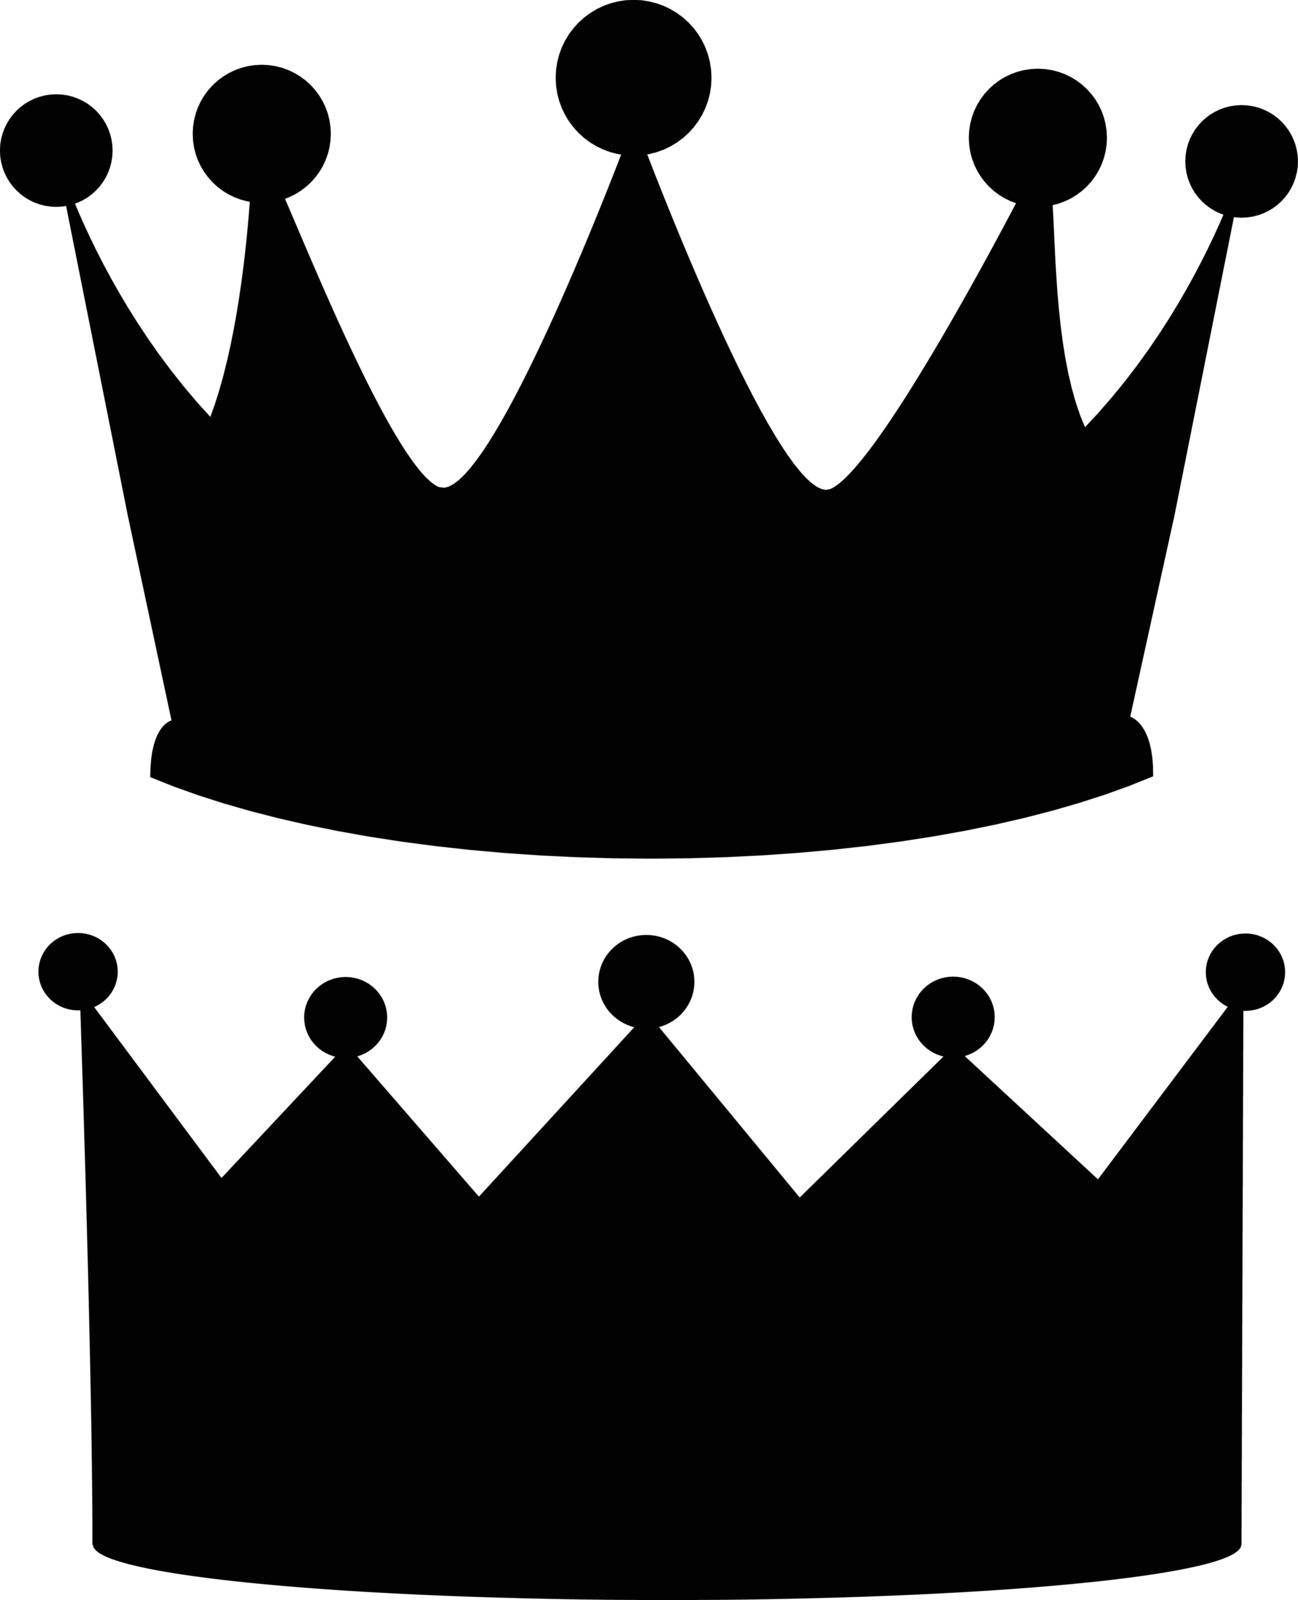 Crown vector illustration eps 10